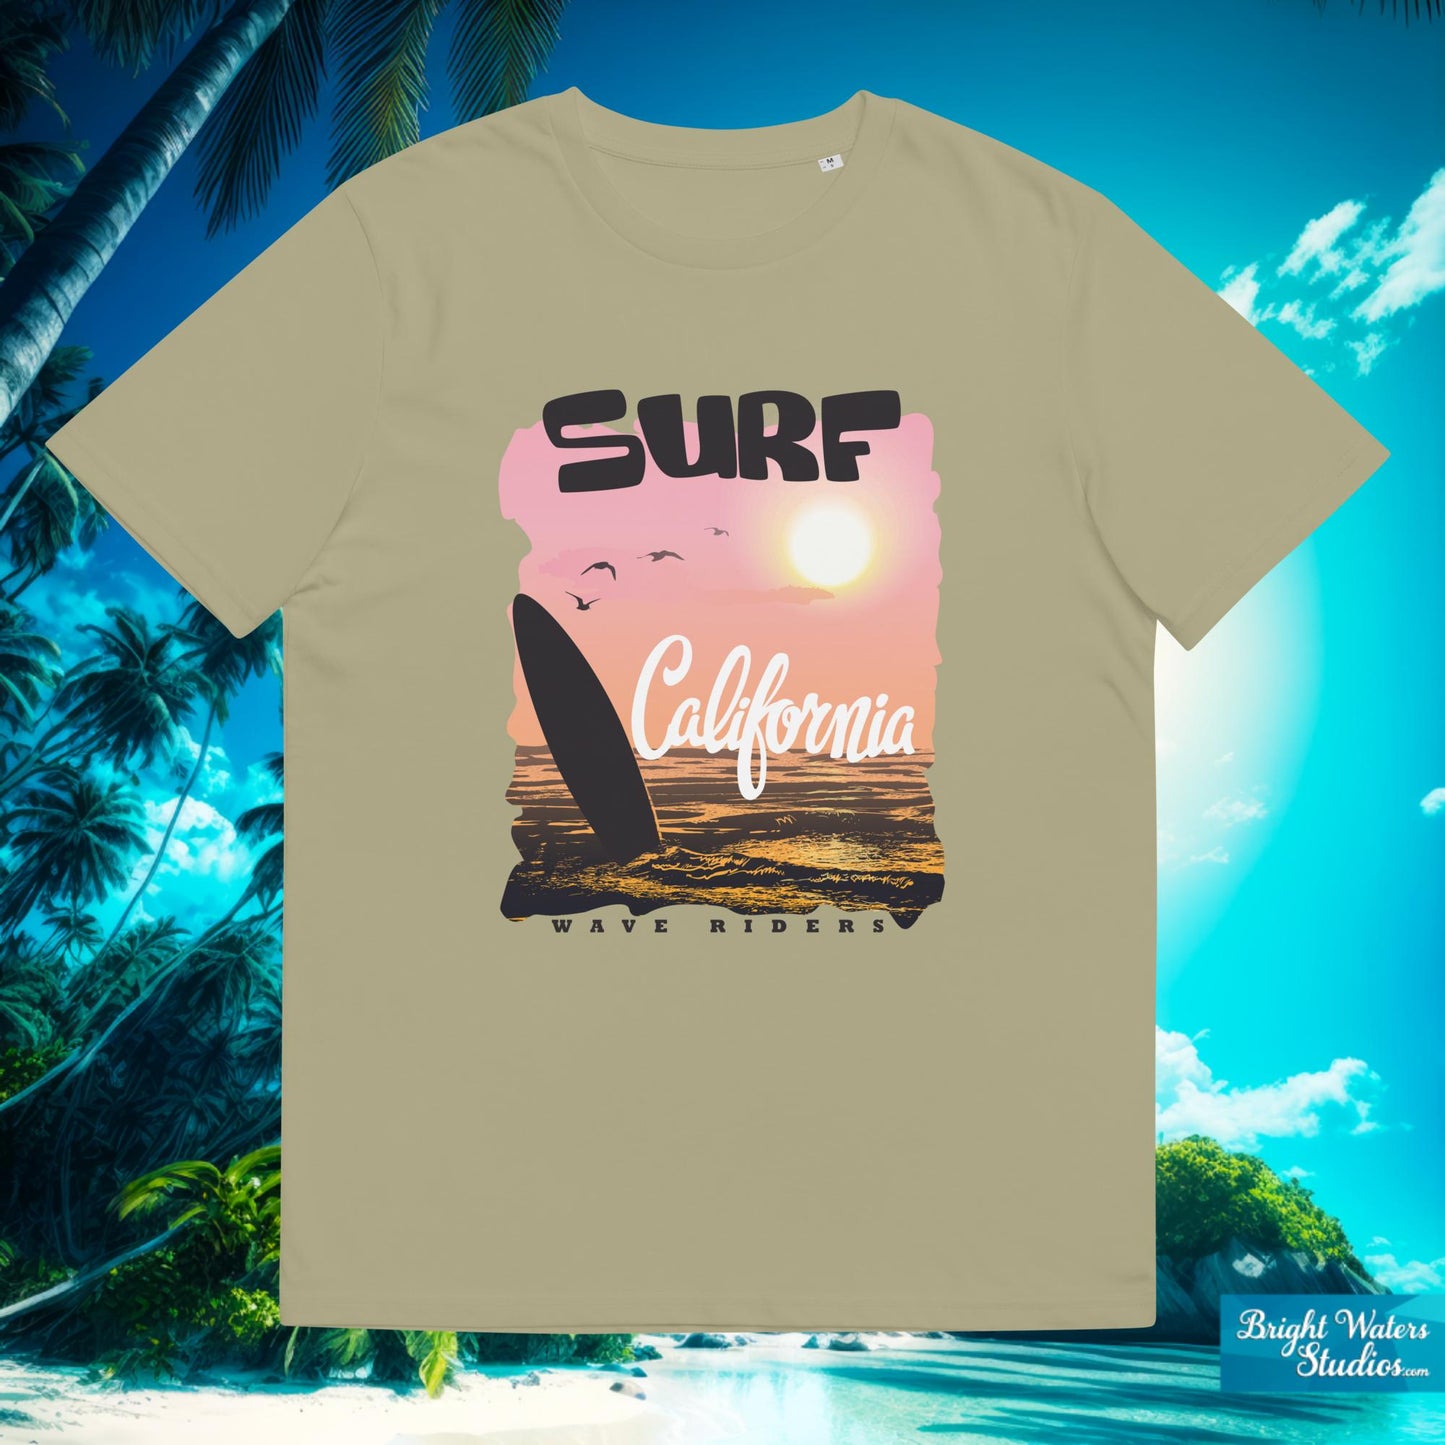 Surf California T-Shirt